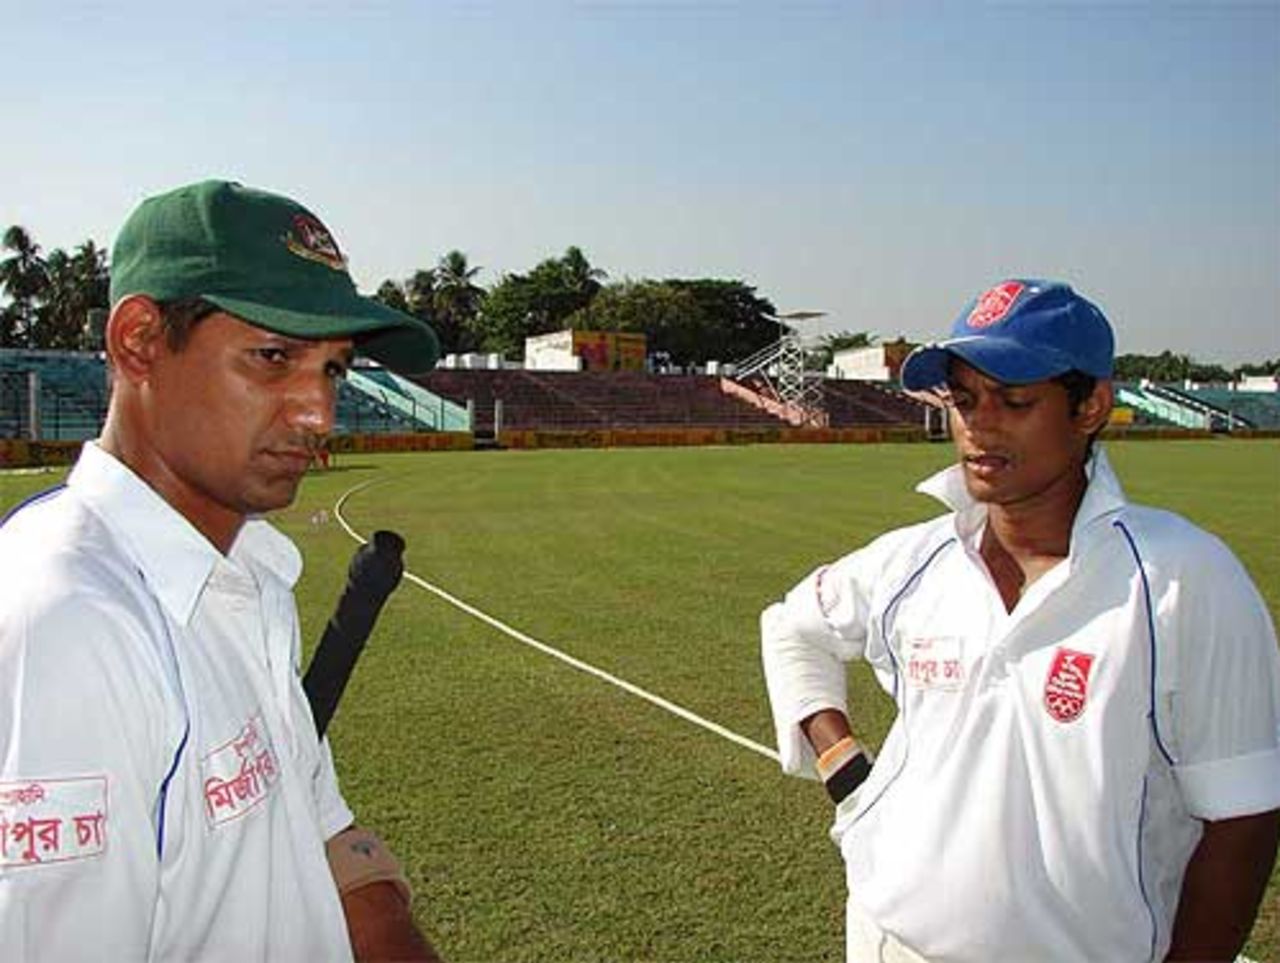 Habibul Bashar and Nazmus Sadat prepare to go onto the field, Khulna Division v Rajshahi Division, National Cricket League, Khulna, 4th day, November 13, 2007